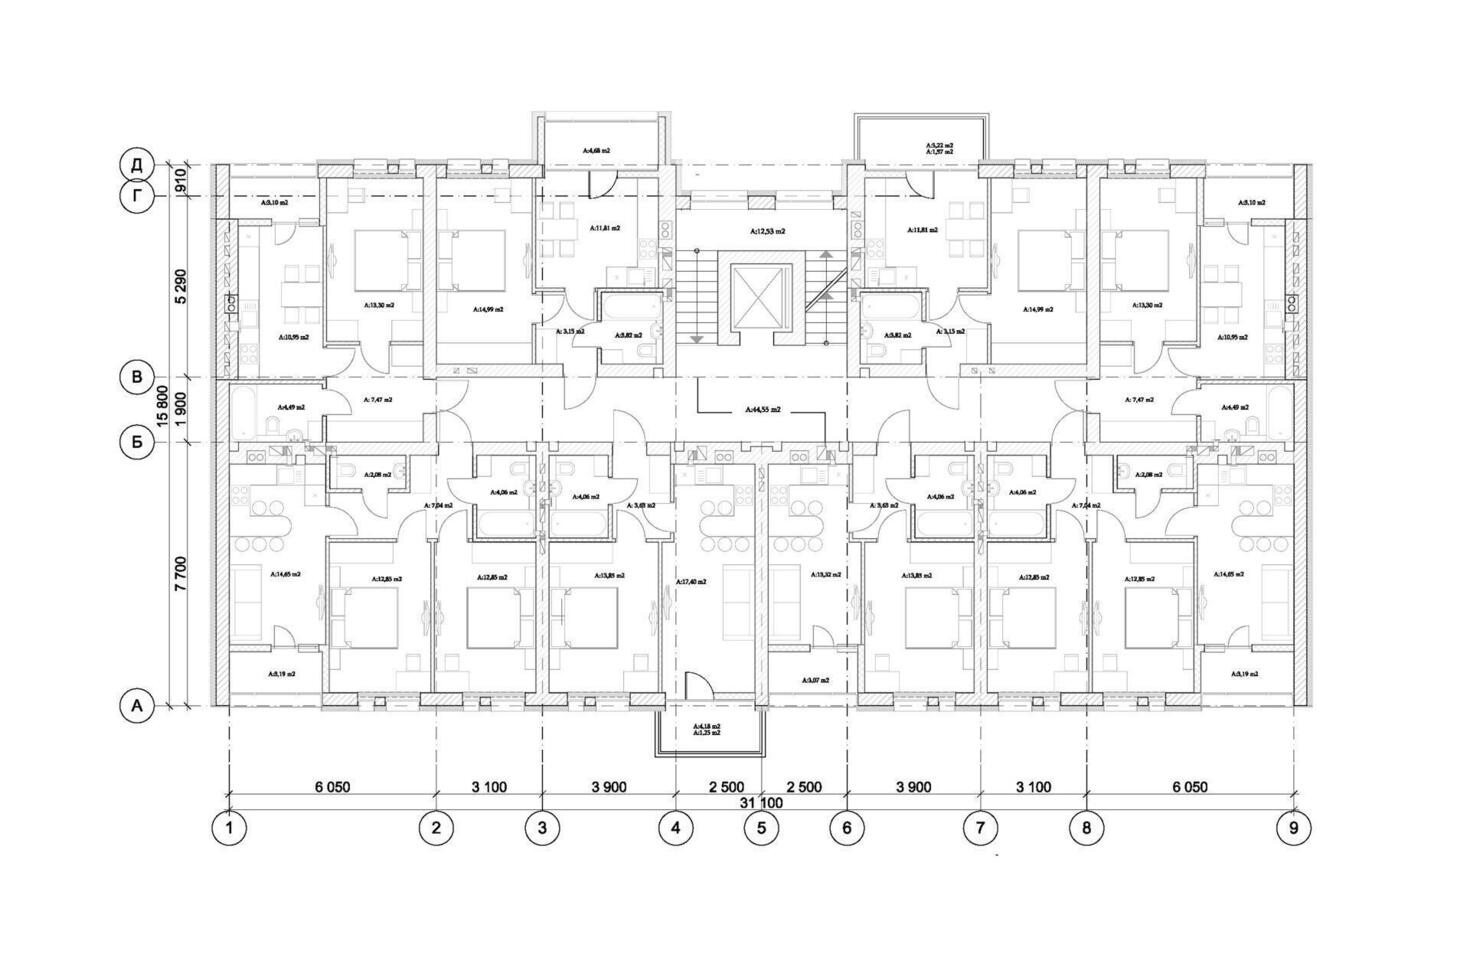 Architectural floor plan, apartment layout, blueprint. Vector illustration